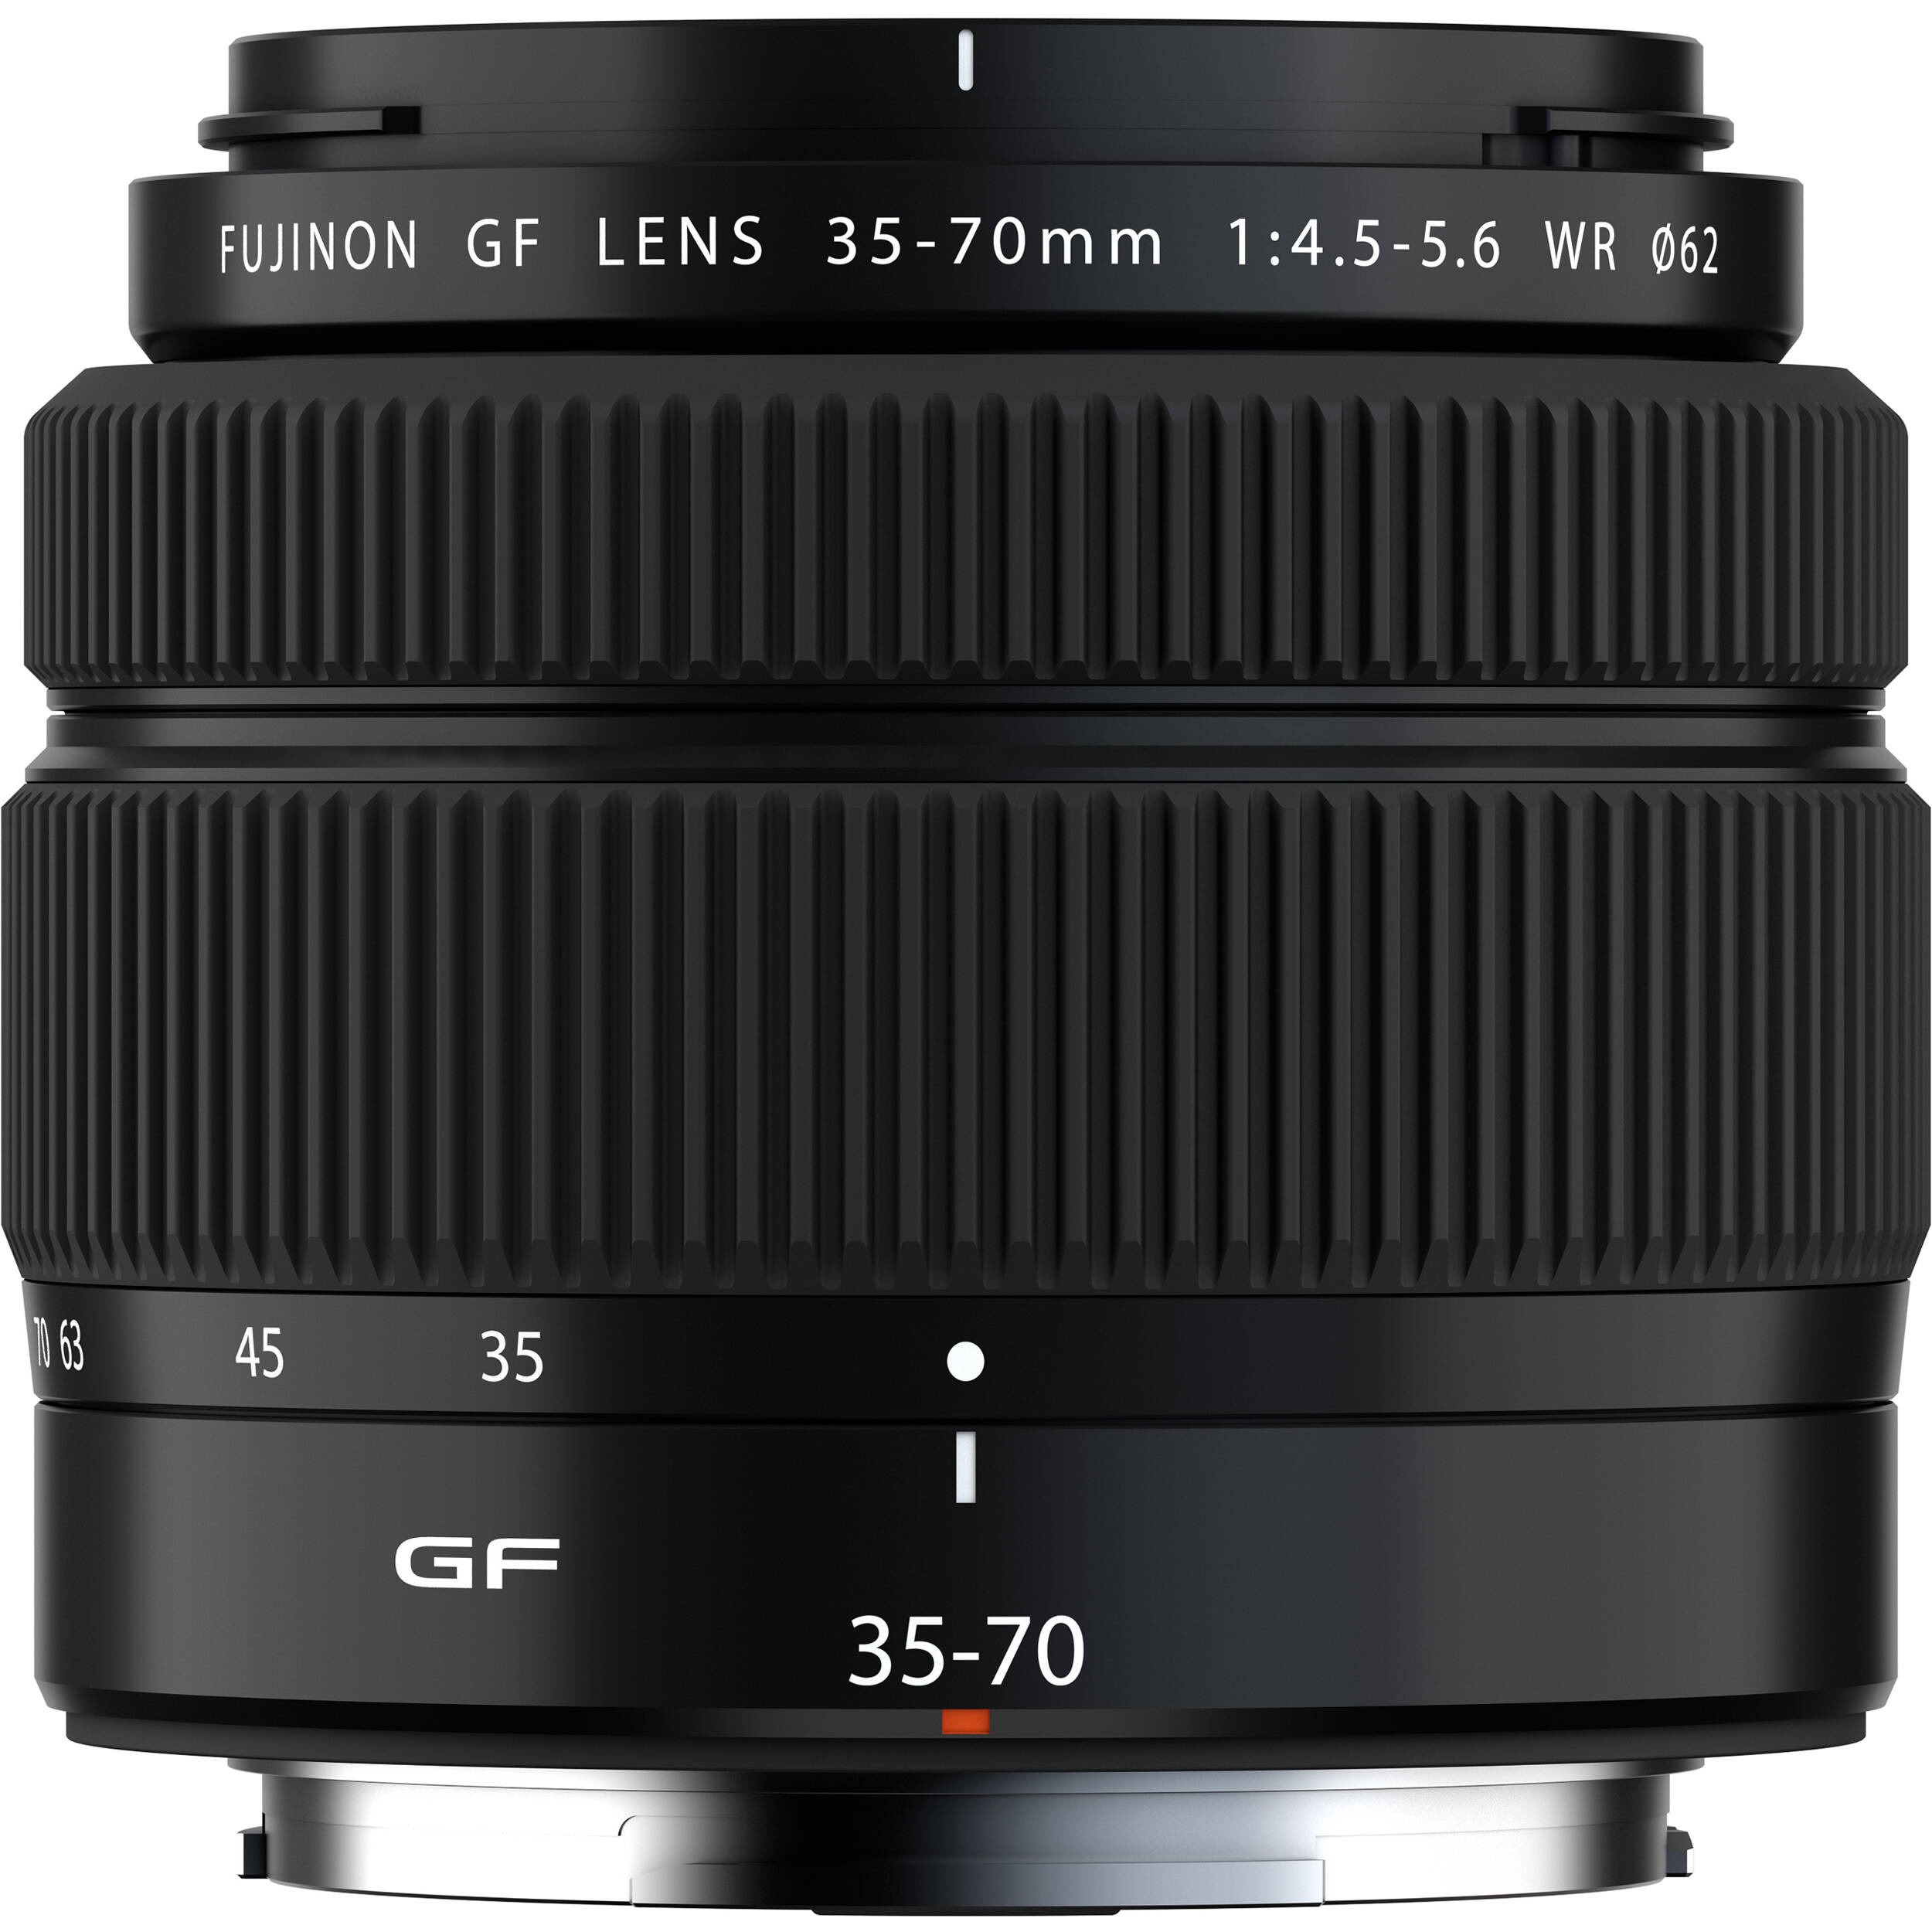 Fujinon GF 35-70mm f/4.5-5.6 WR Lens